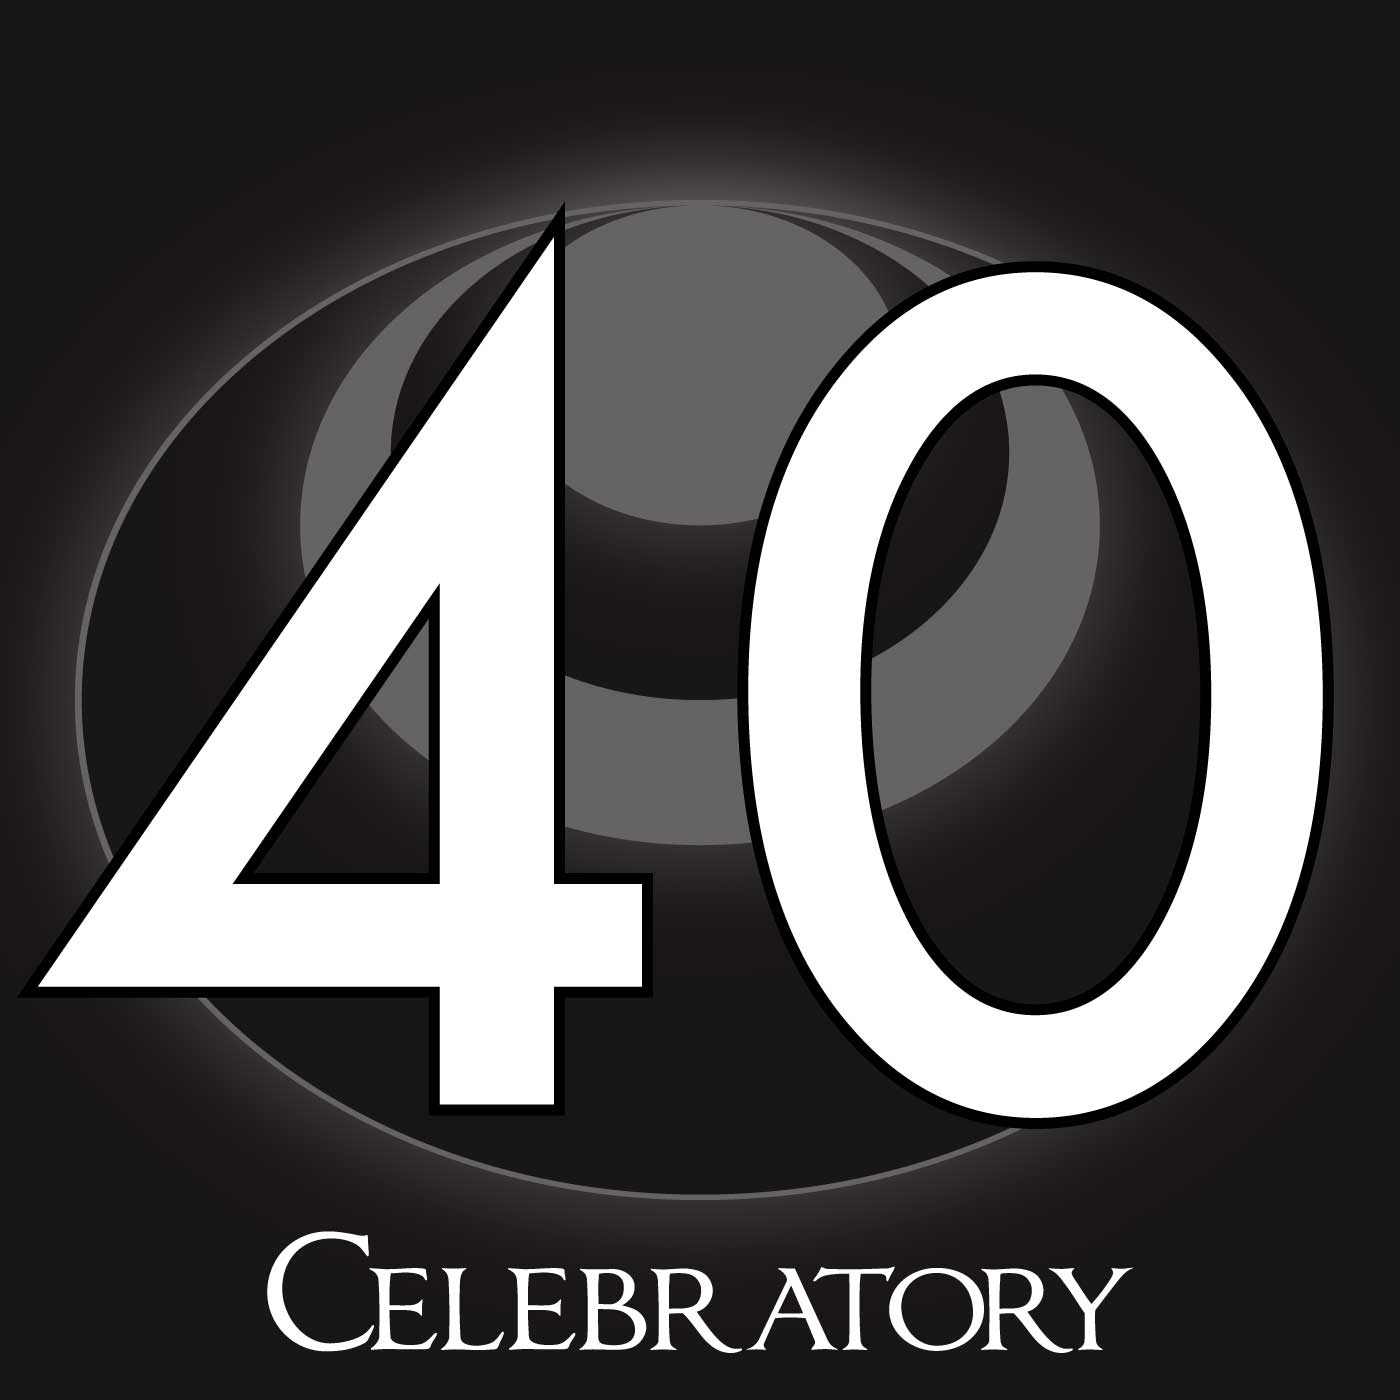 40 – Celebratory